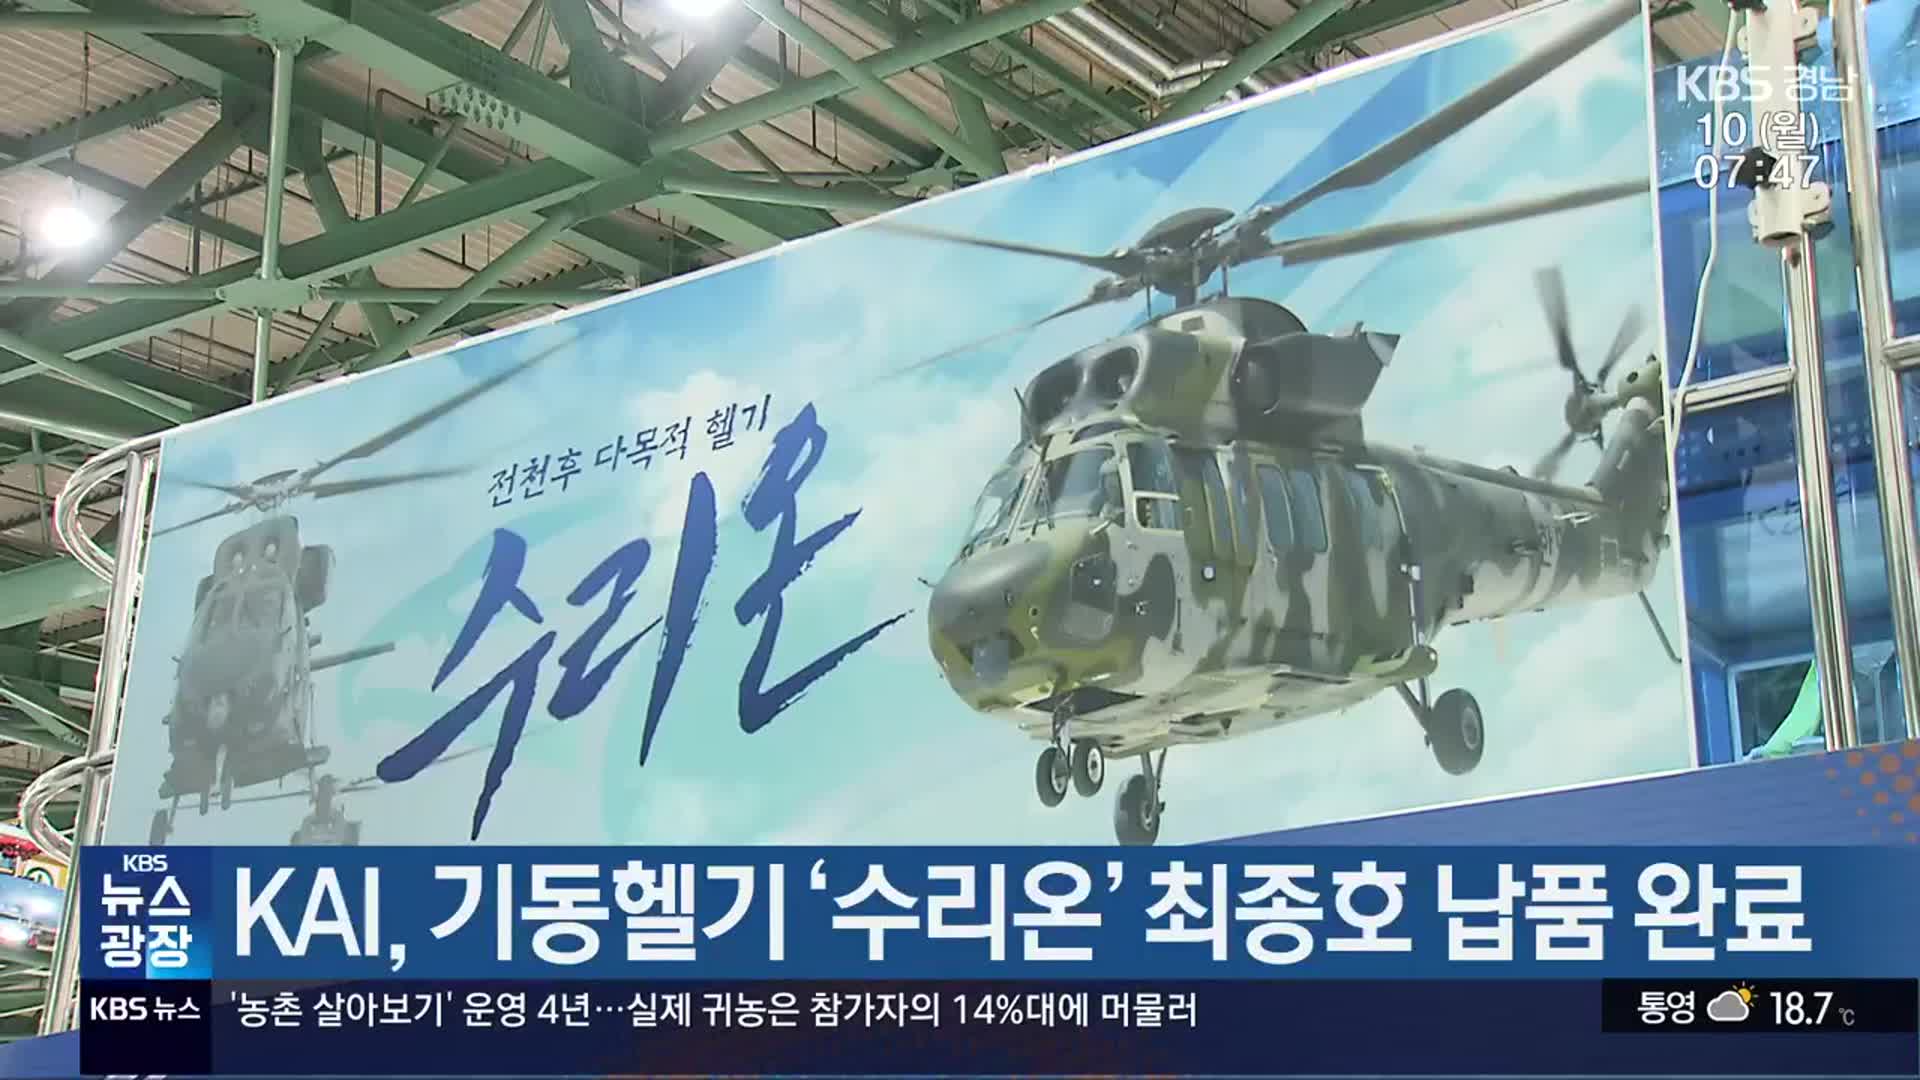 KAI, 기동헬기 ‘수리온’ 최종호 납품 완료